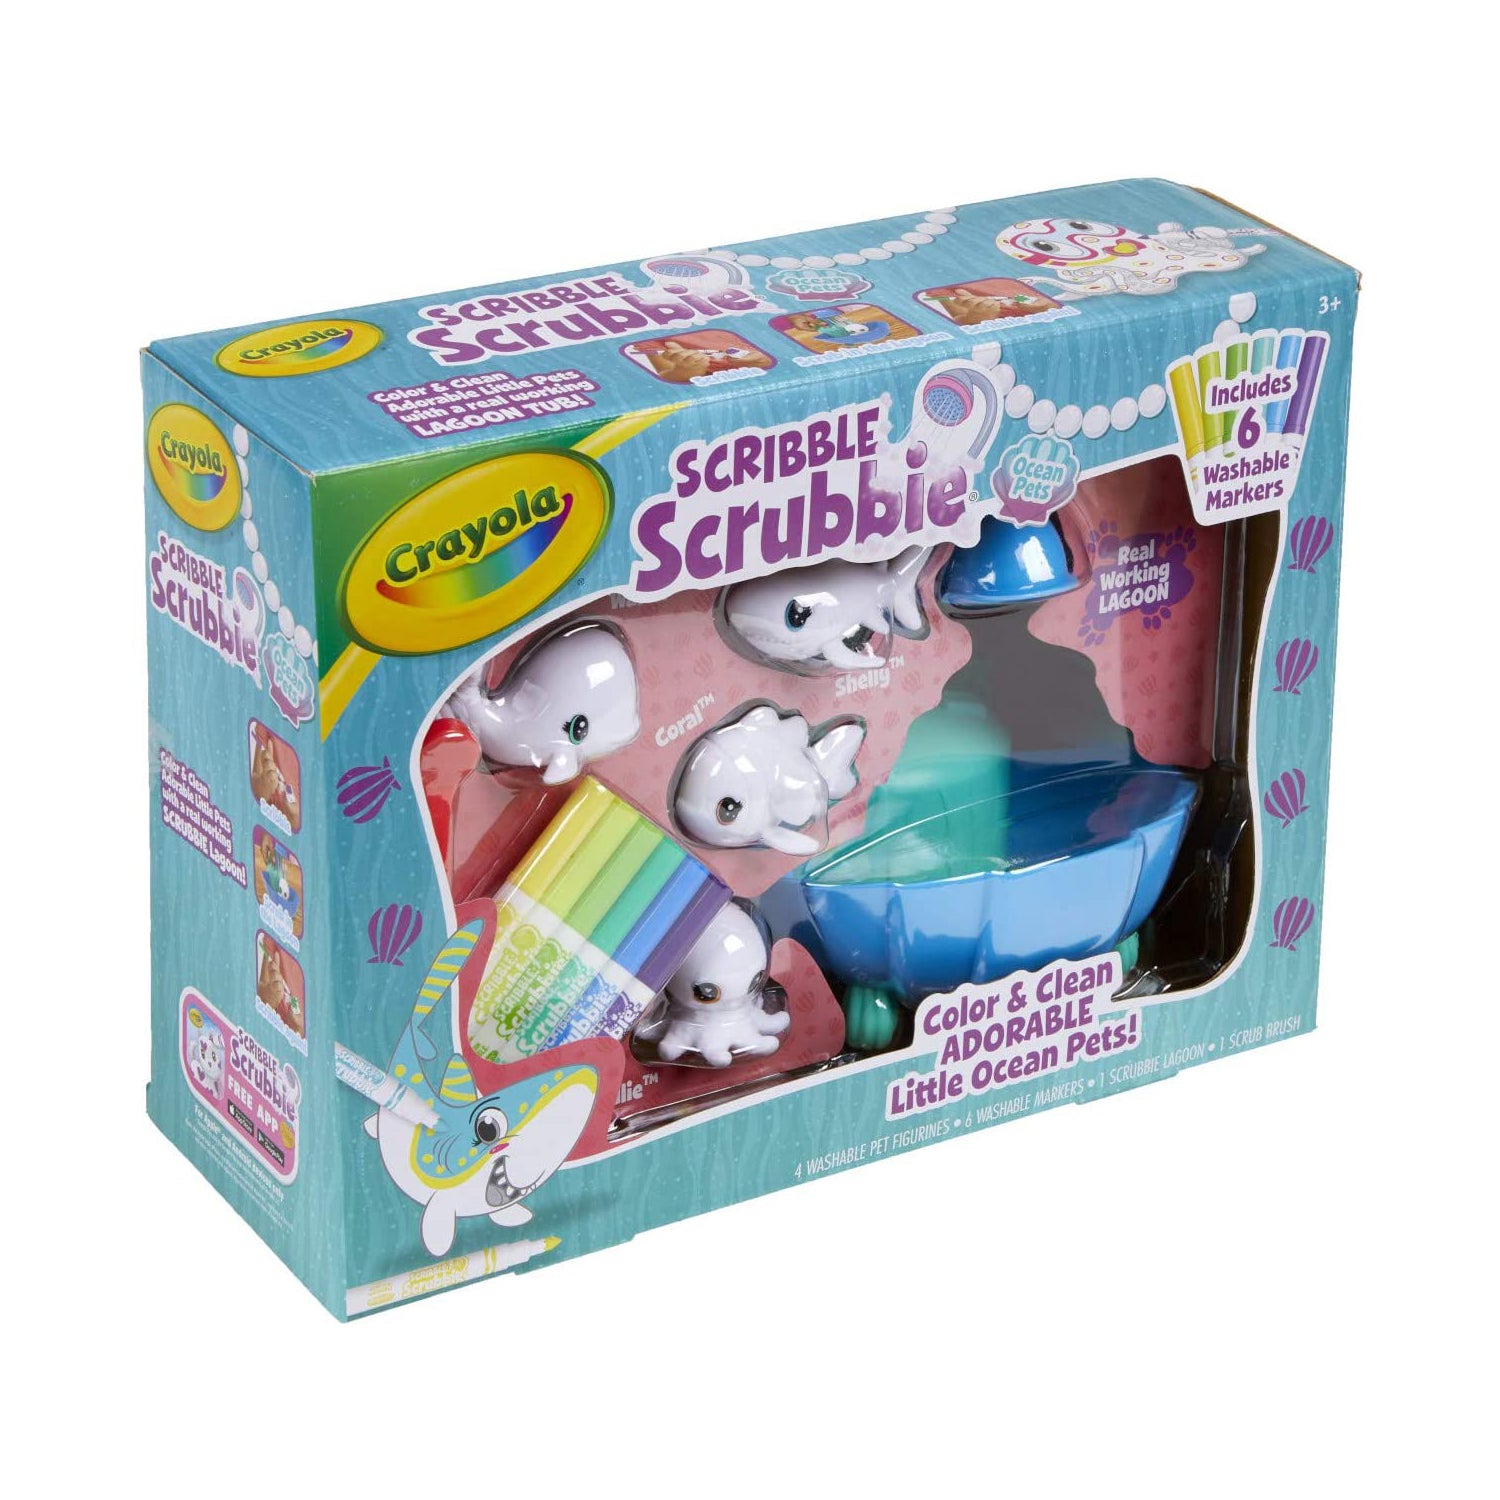 Crayola Scribble Scrubbie - Ocean Pets Lagoon Playset